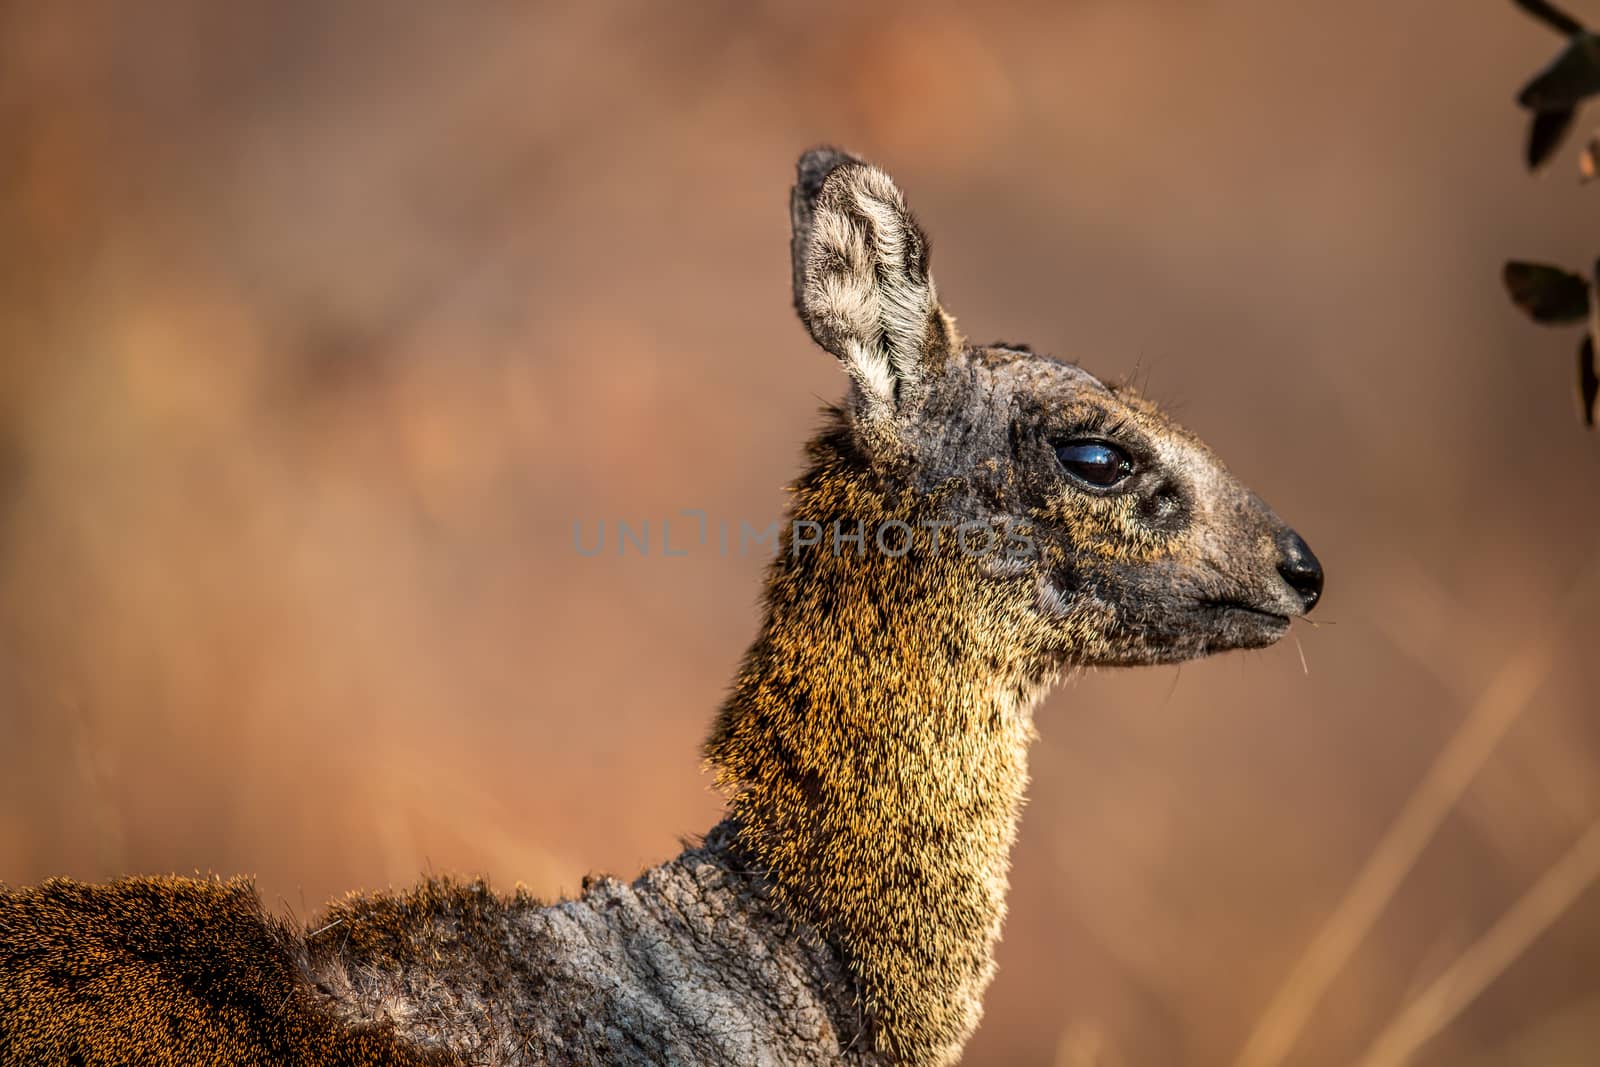 Close up of a Klipspringer in the Welgevonden game reserve, South Africa.